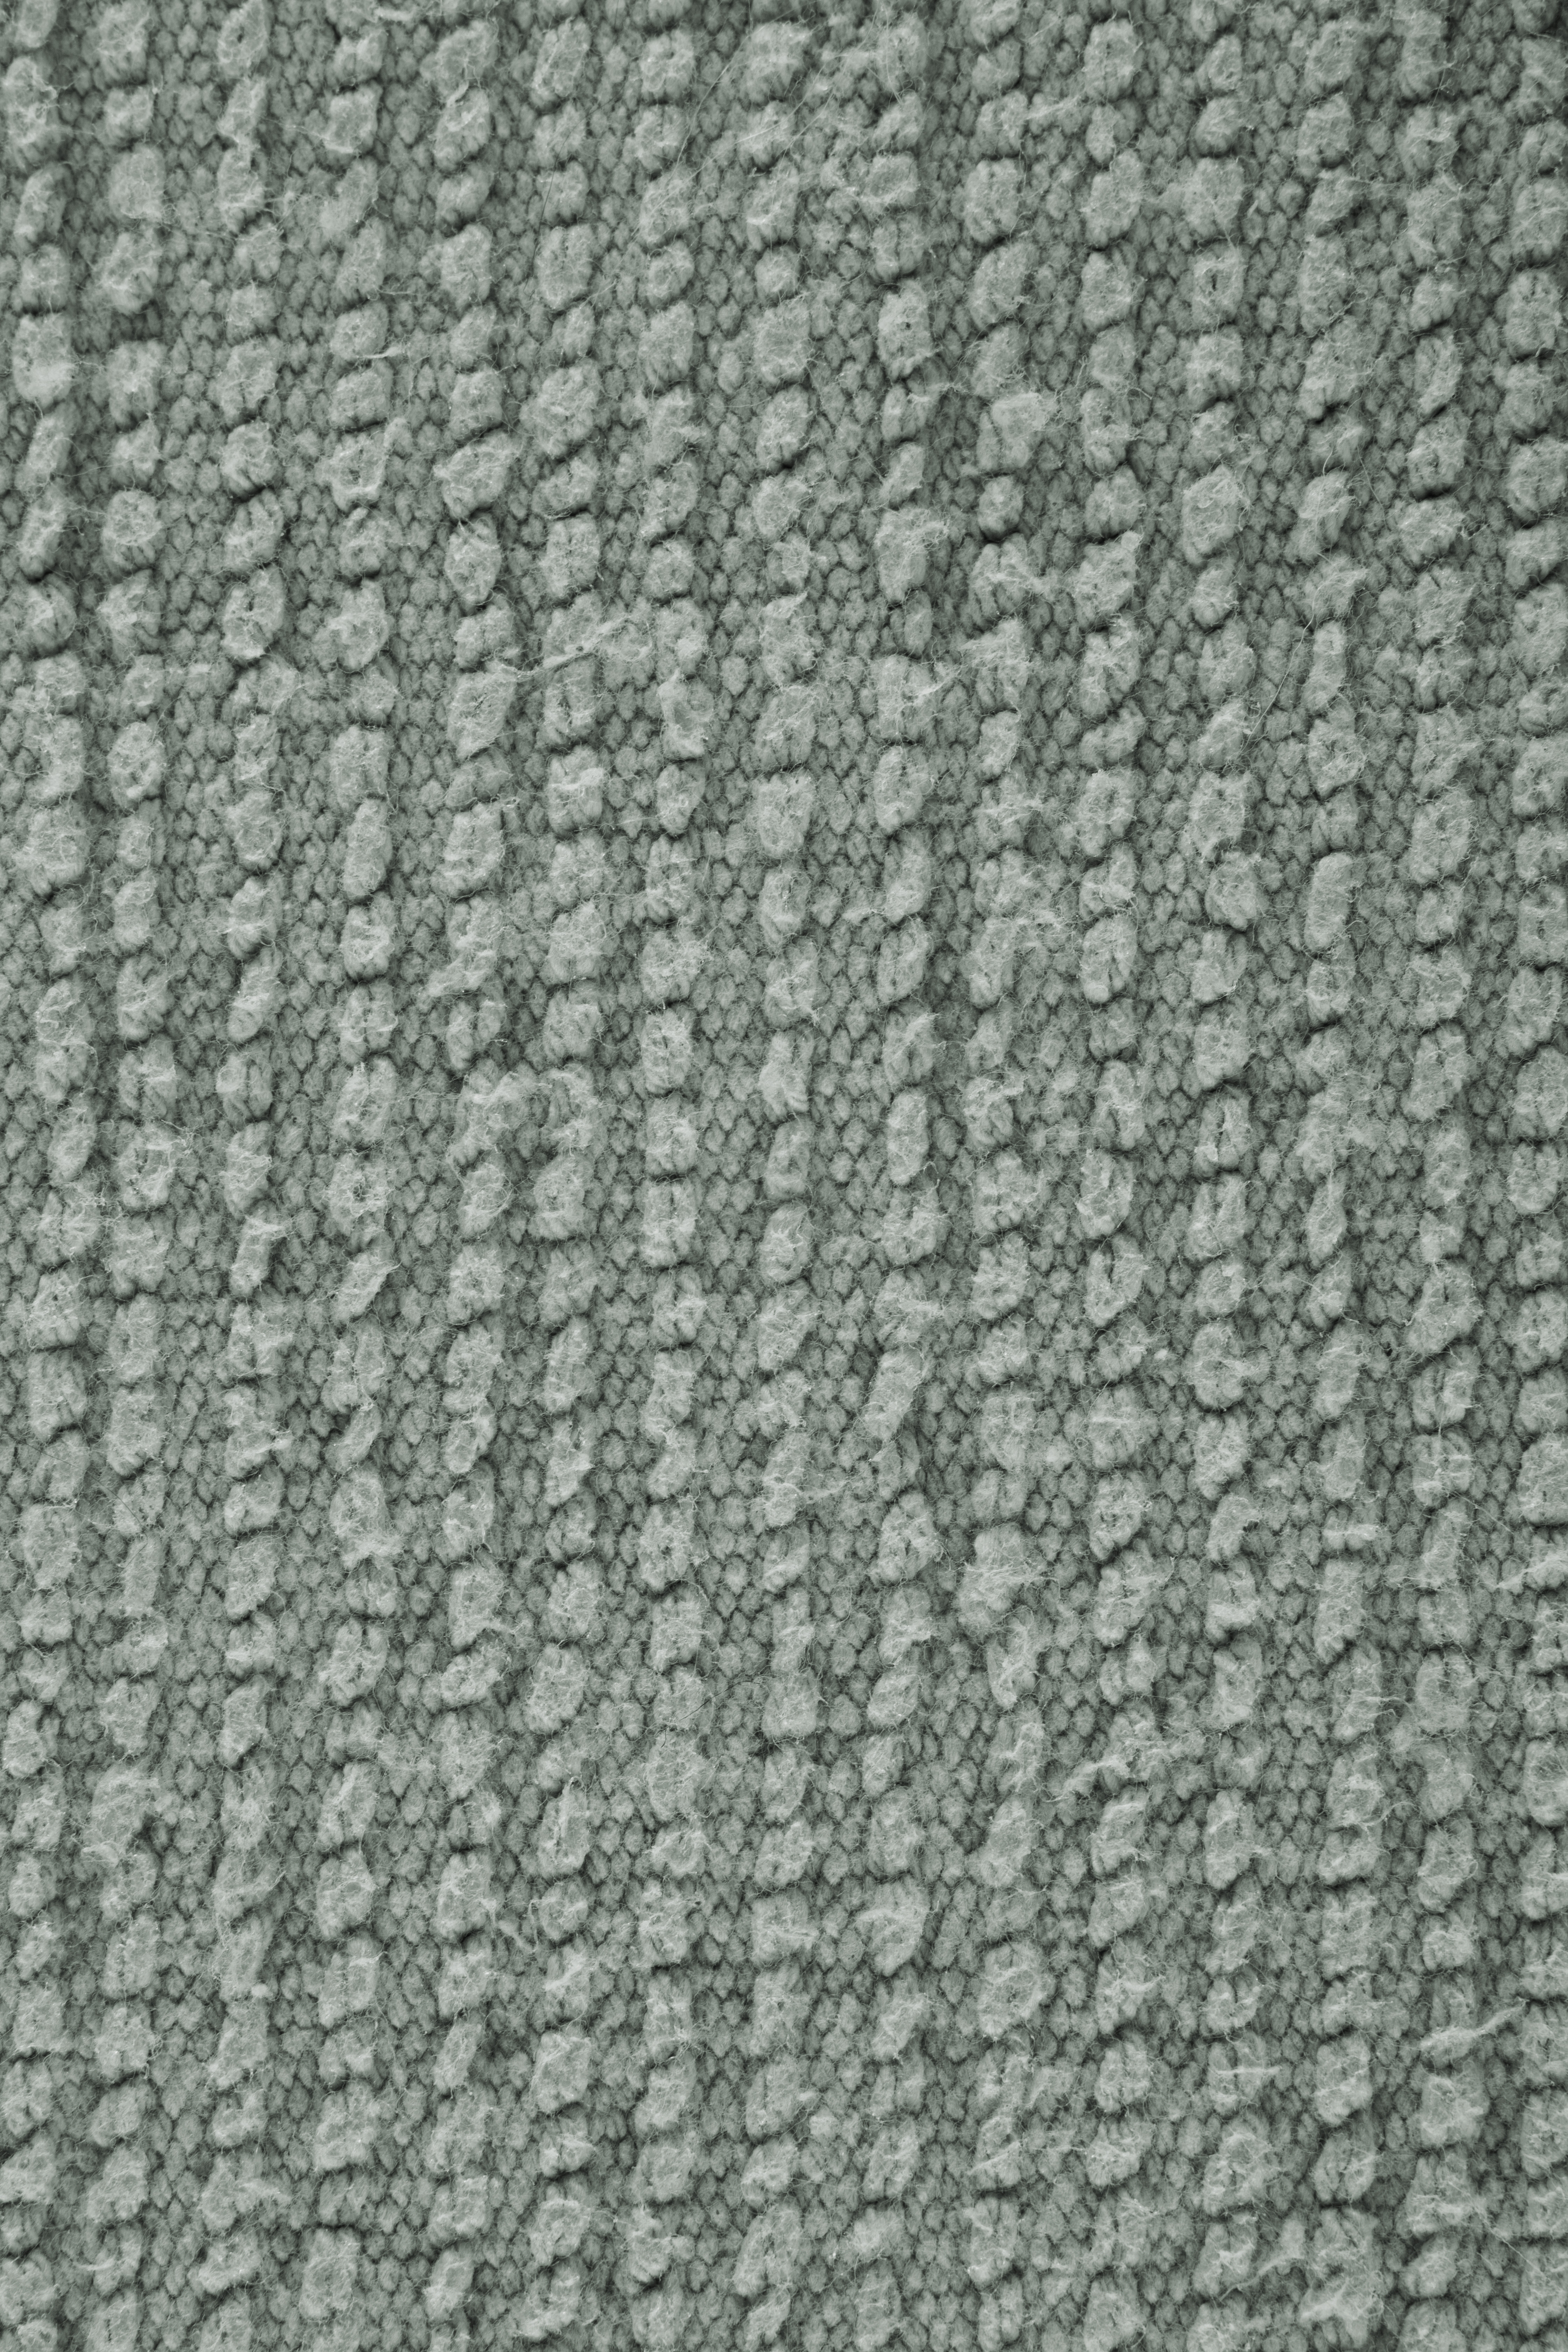 Bath carpet RIVA - cotton anti-slip, 60x60cm, stone green